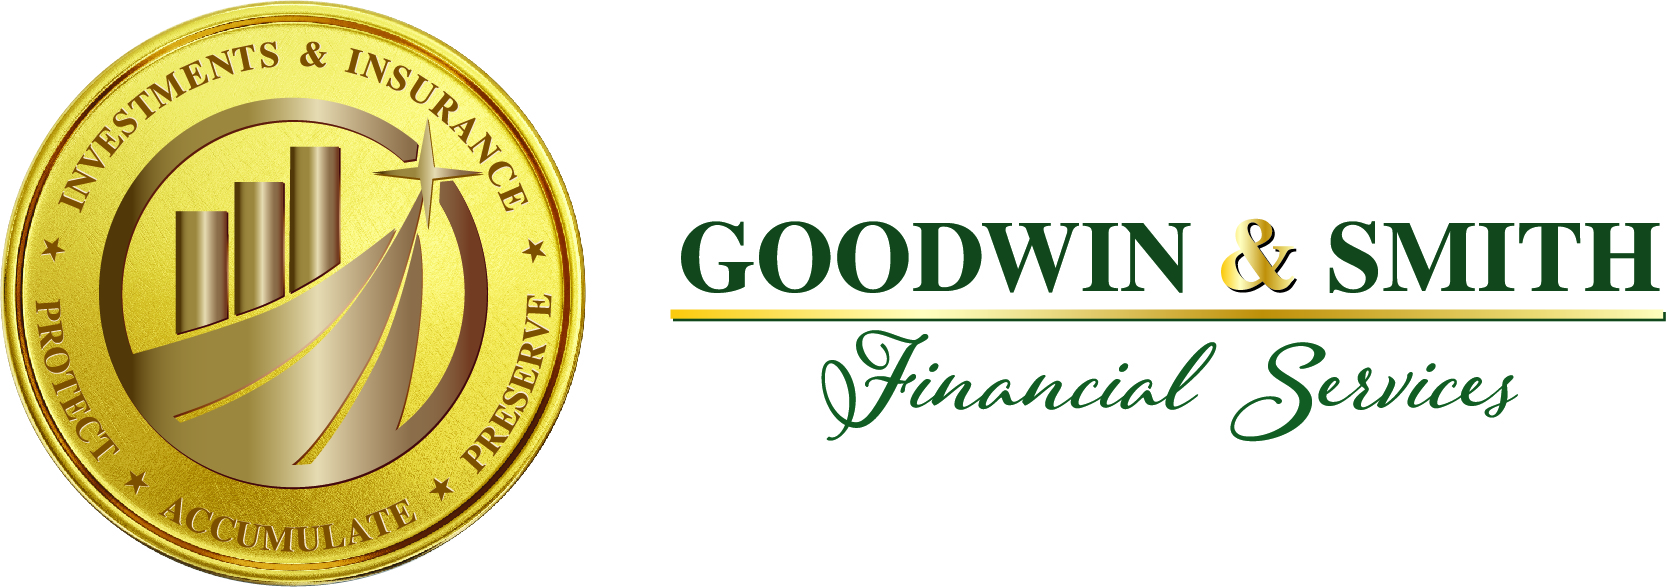 Goodwin Financial